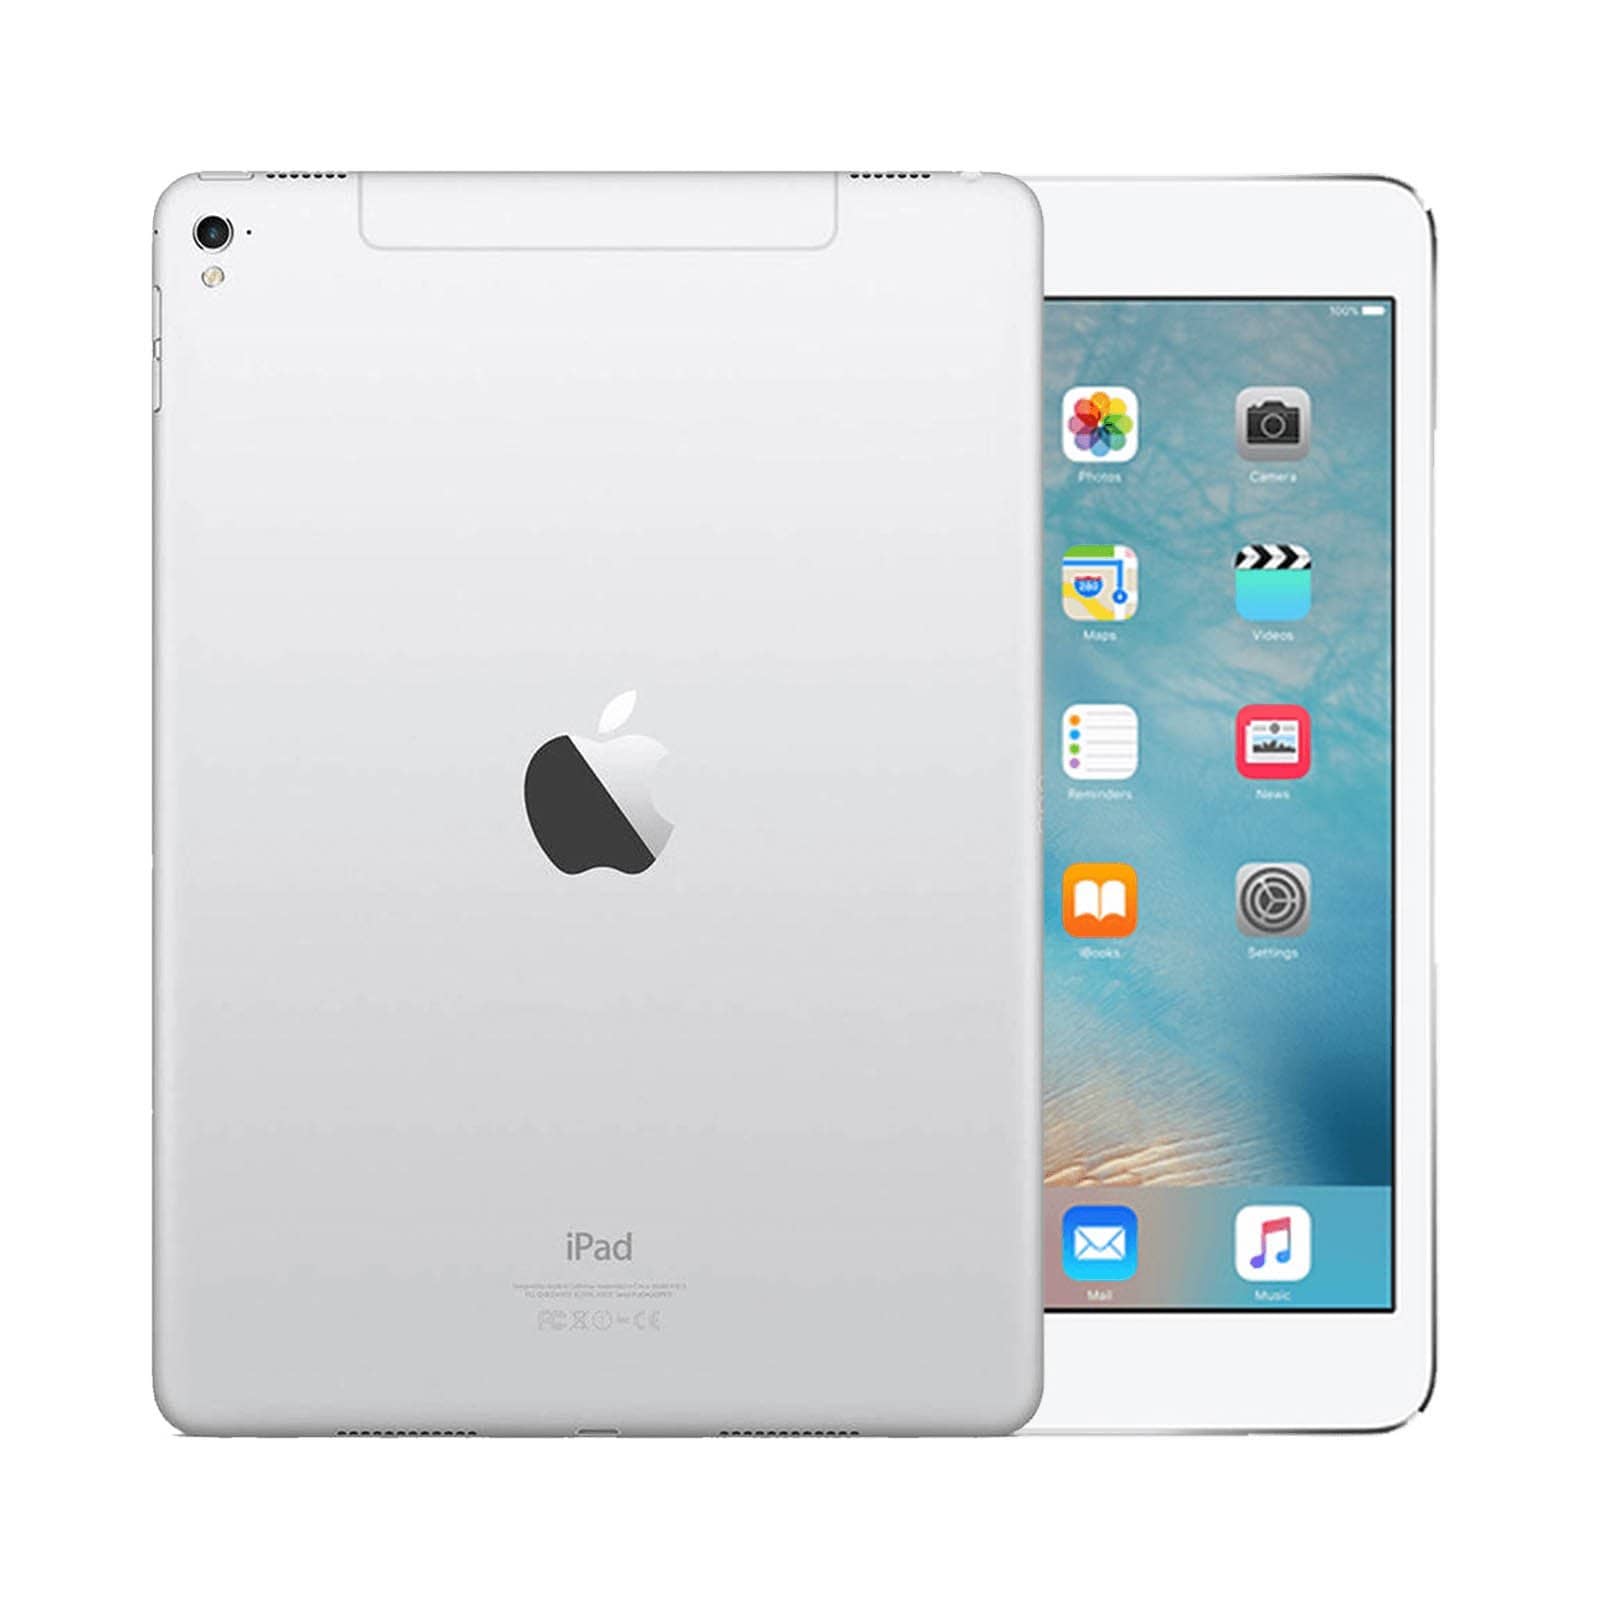 iPad Pro 9.7 Inch 32GB Silver Good - Unlocked 32GB Silver Good